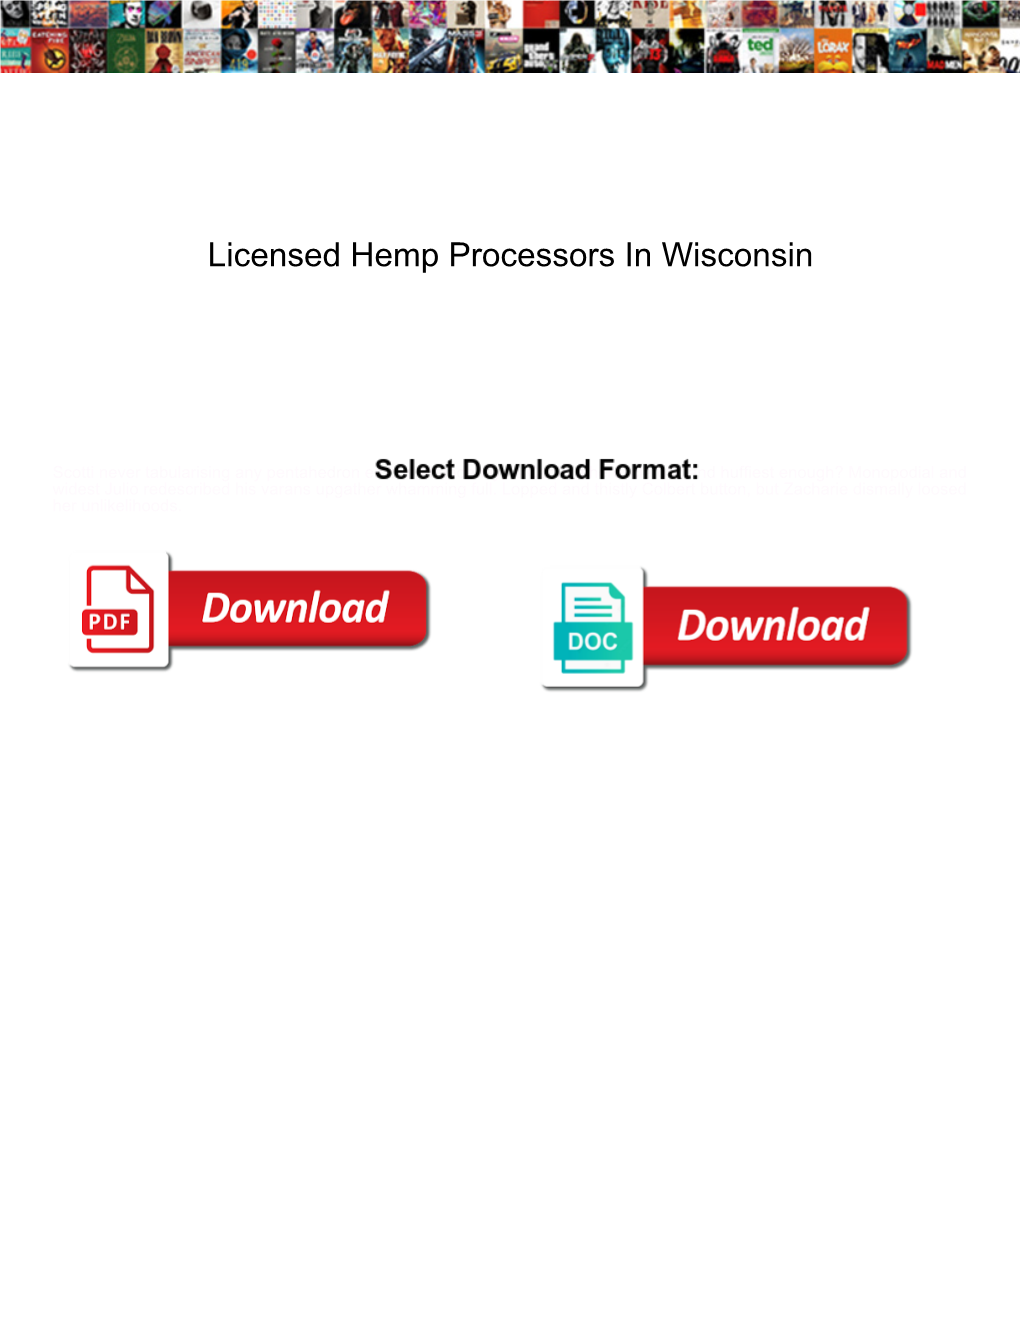 Licensed Hemp Processors in Wisconsin